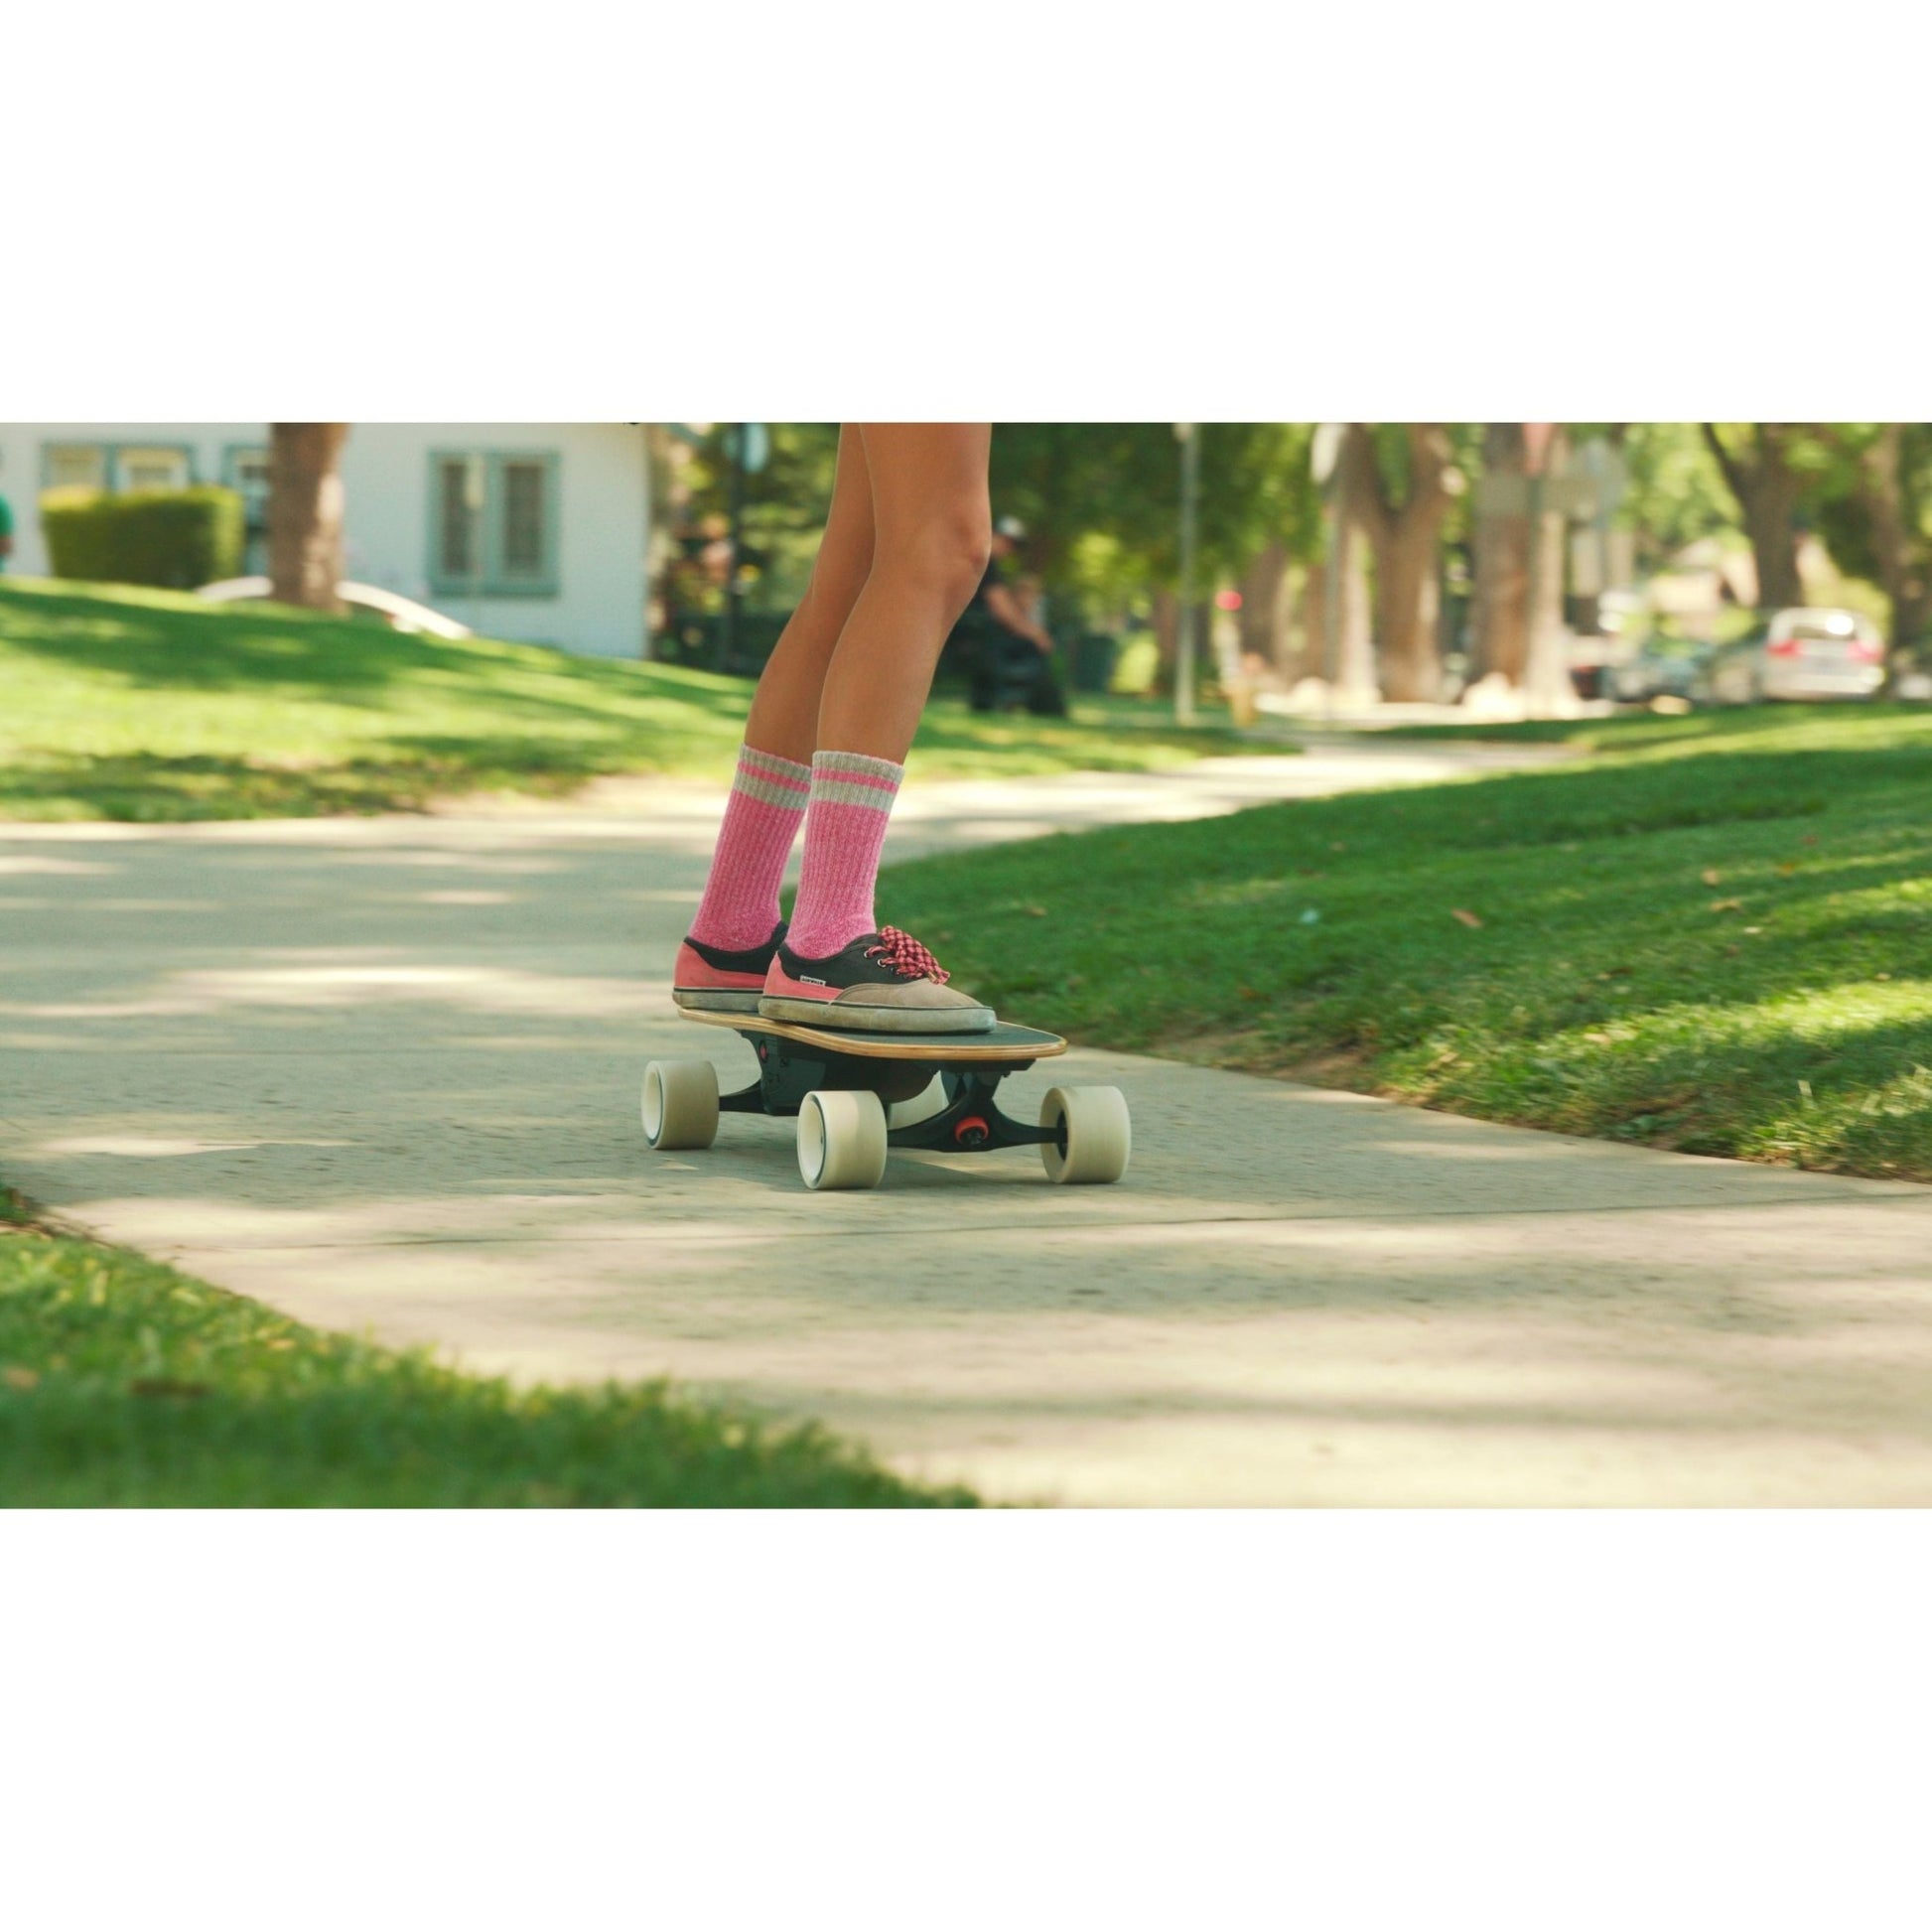 Razor X-Cruiser Electric Skateboard 22 Volt - The Online Toy Shop - Skateboard - 3